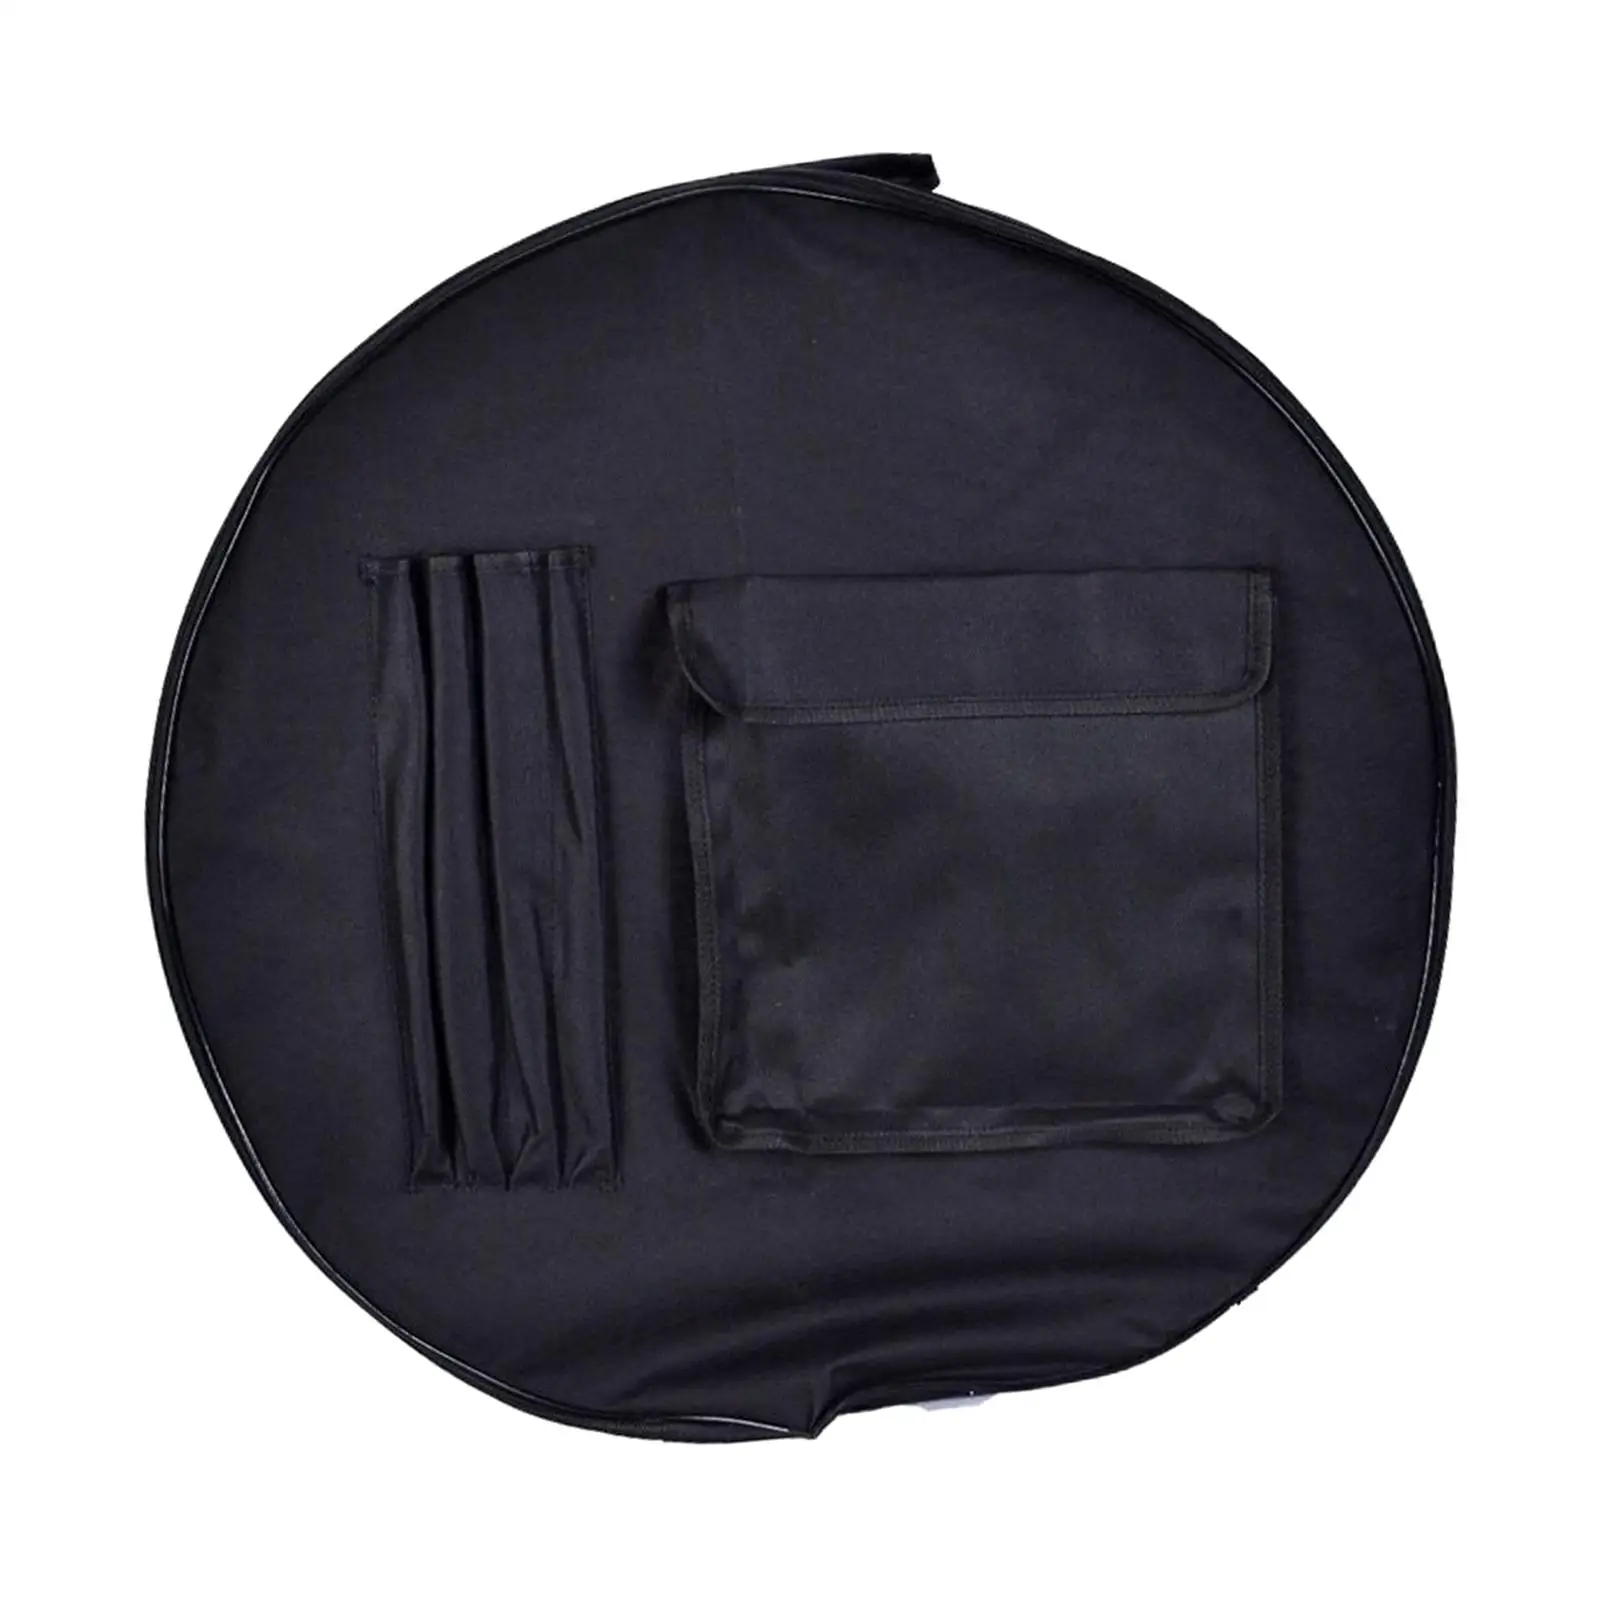 Oxford Cloth Snare Drum Bag Adjustable Strap Waterproof Storage Organizer for Snare Drum